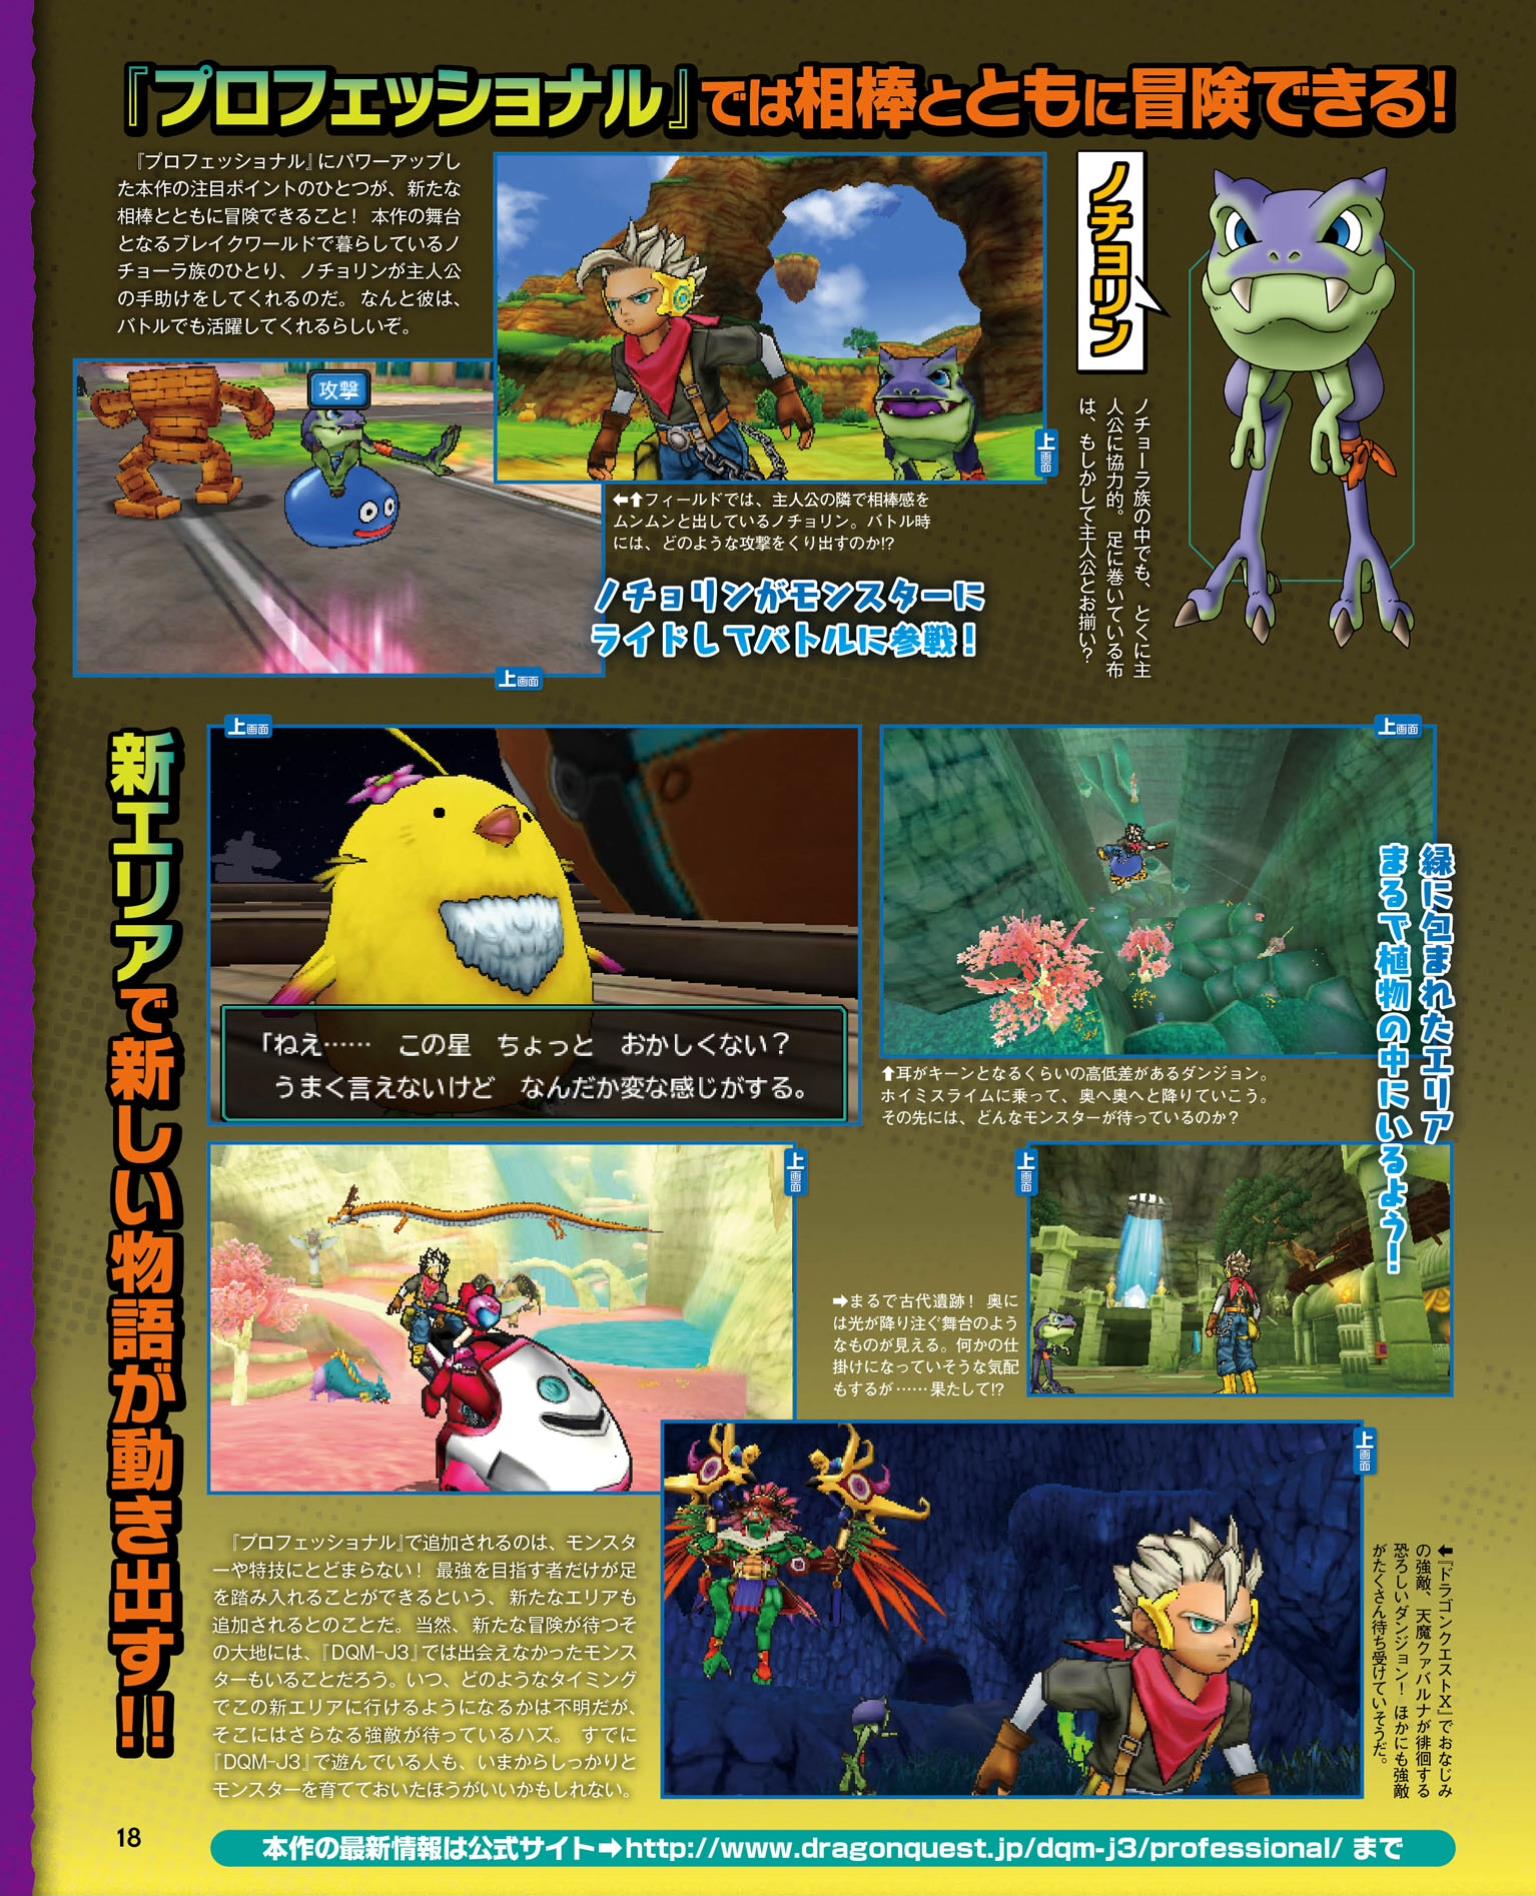 Scans Roundup Dragon Quest Monsters Joker 3 Professional Pokemon Sun Moon More Nintendo Everything